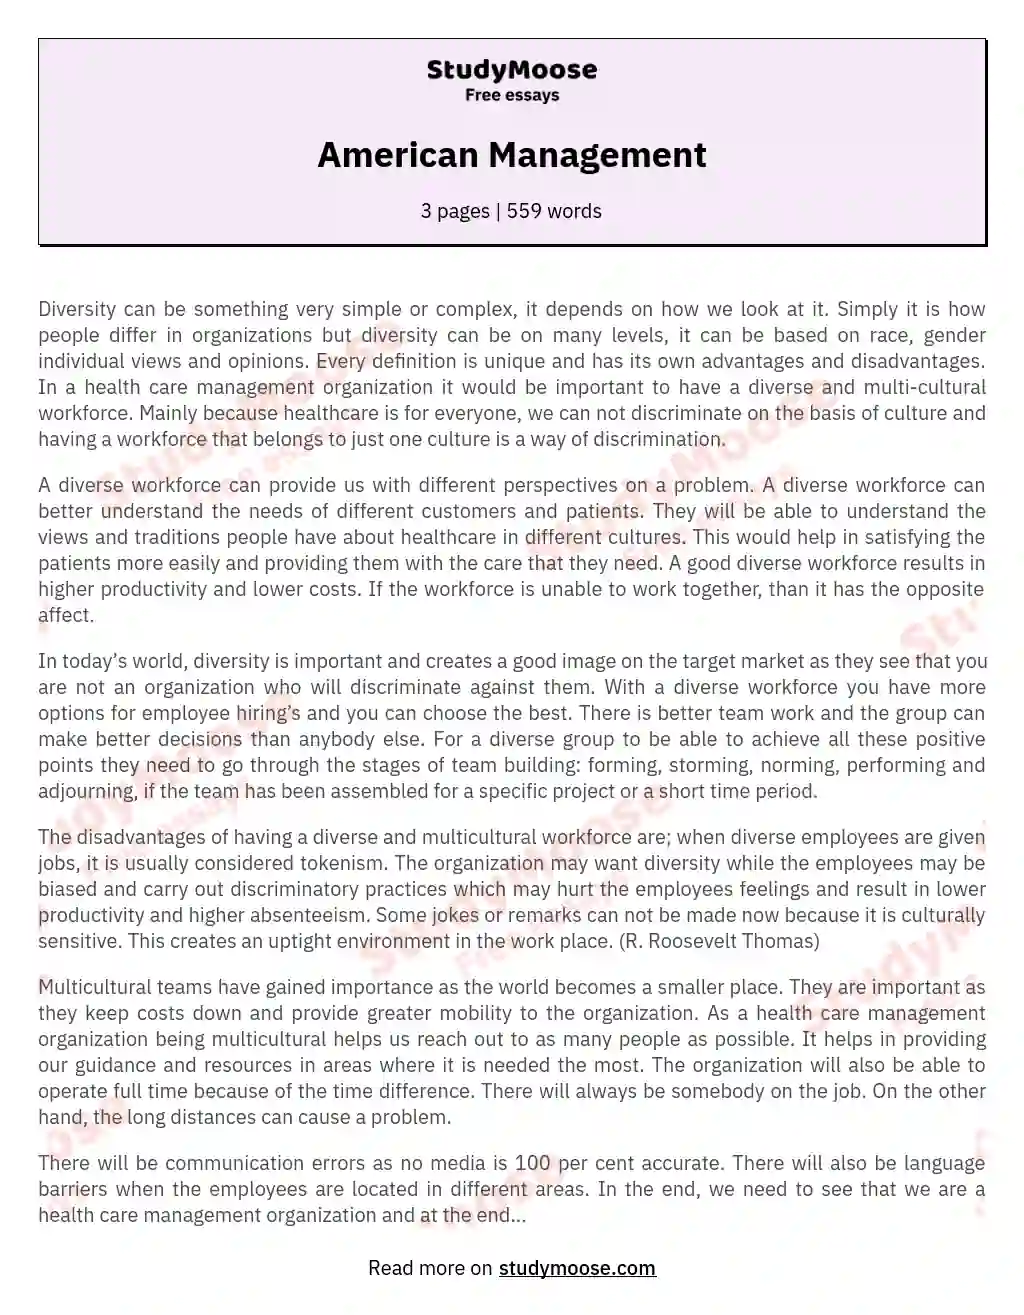 American Management essay